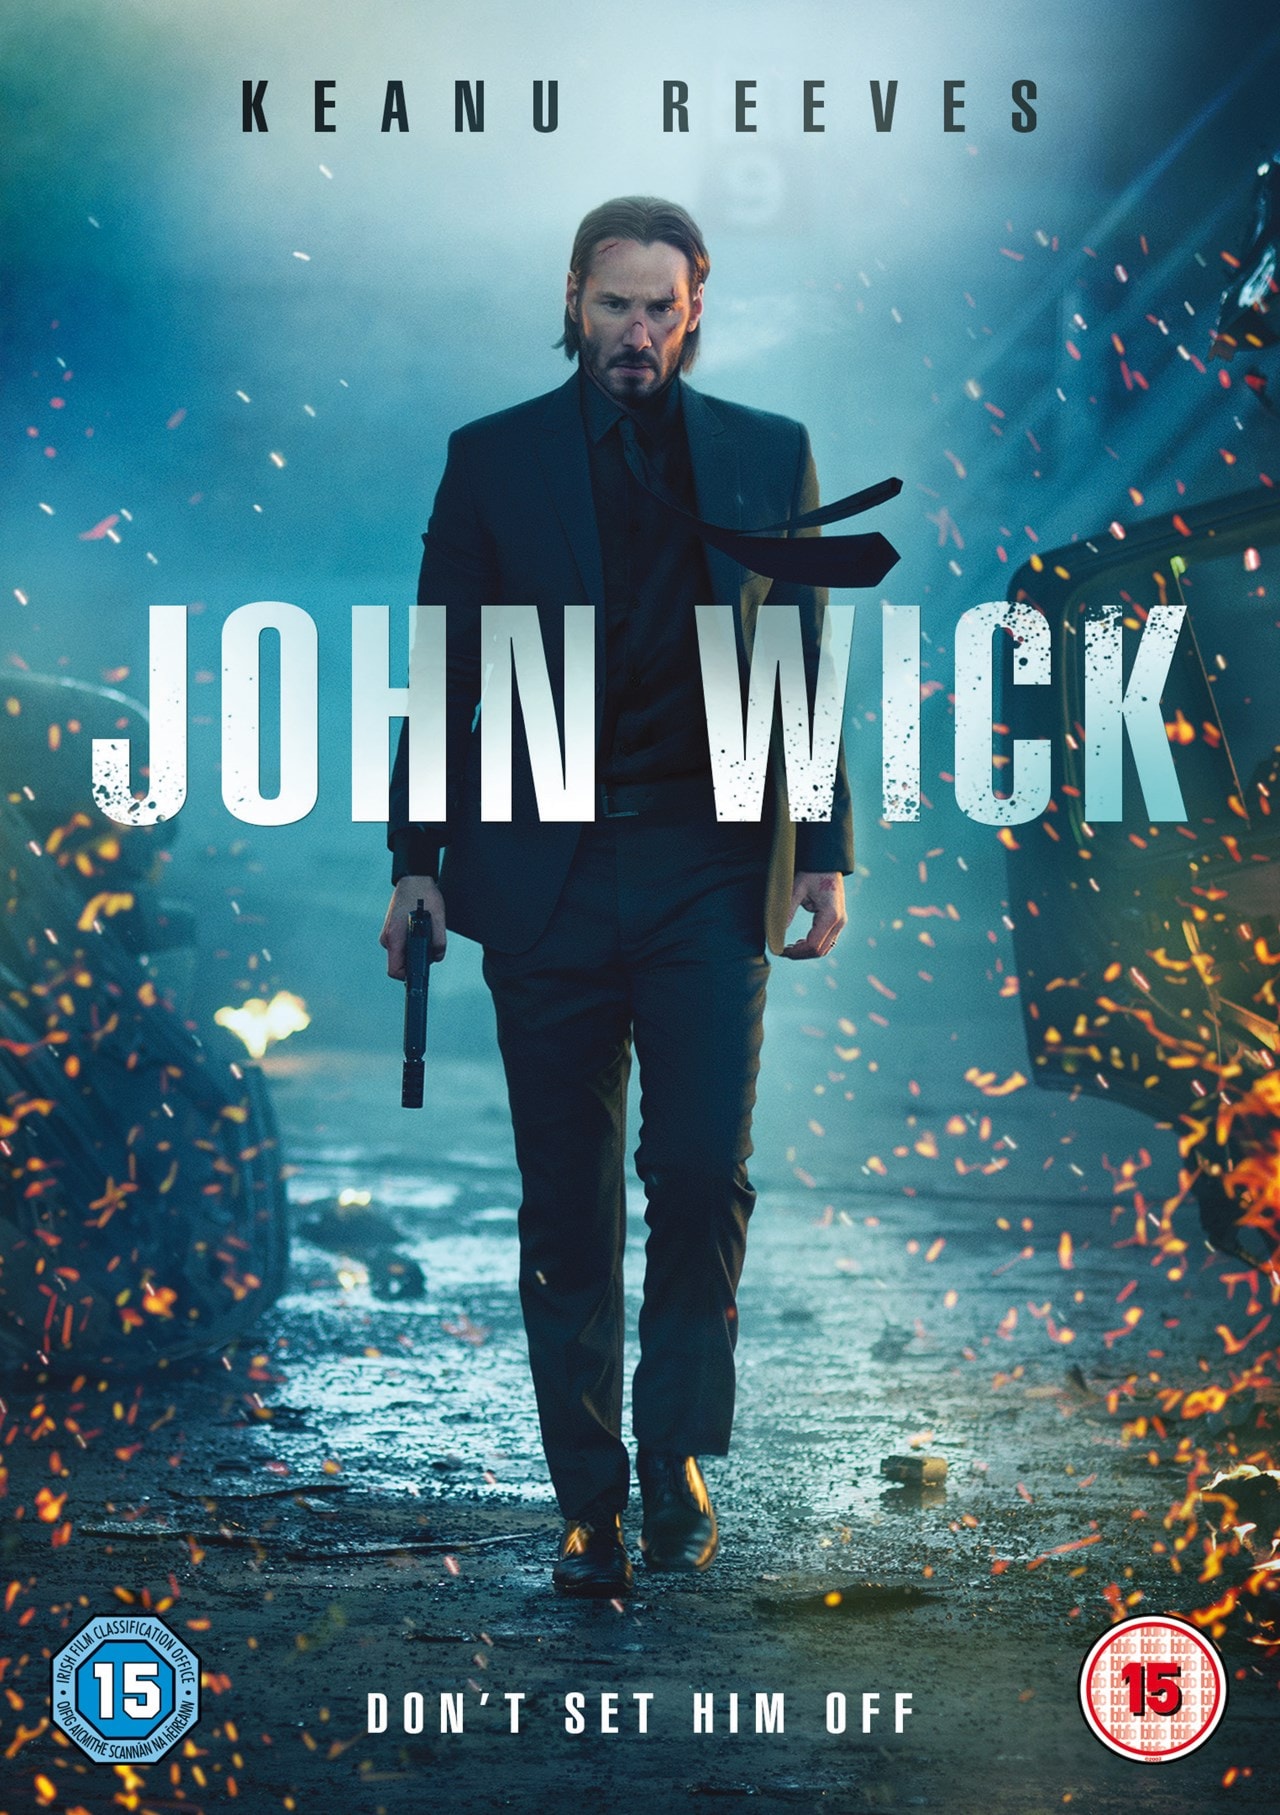 John Wick | DVD | Free shipping over £20 | HMV Store